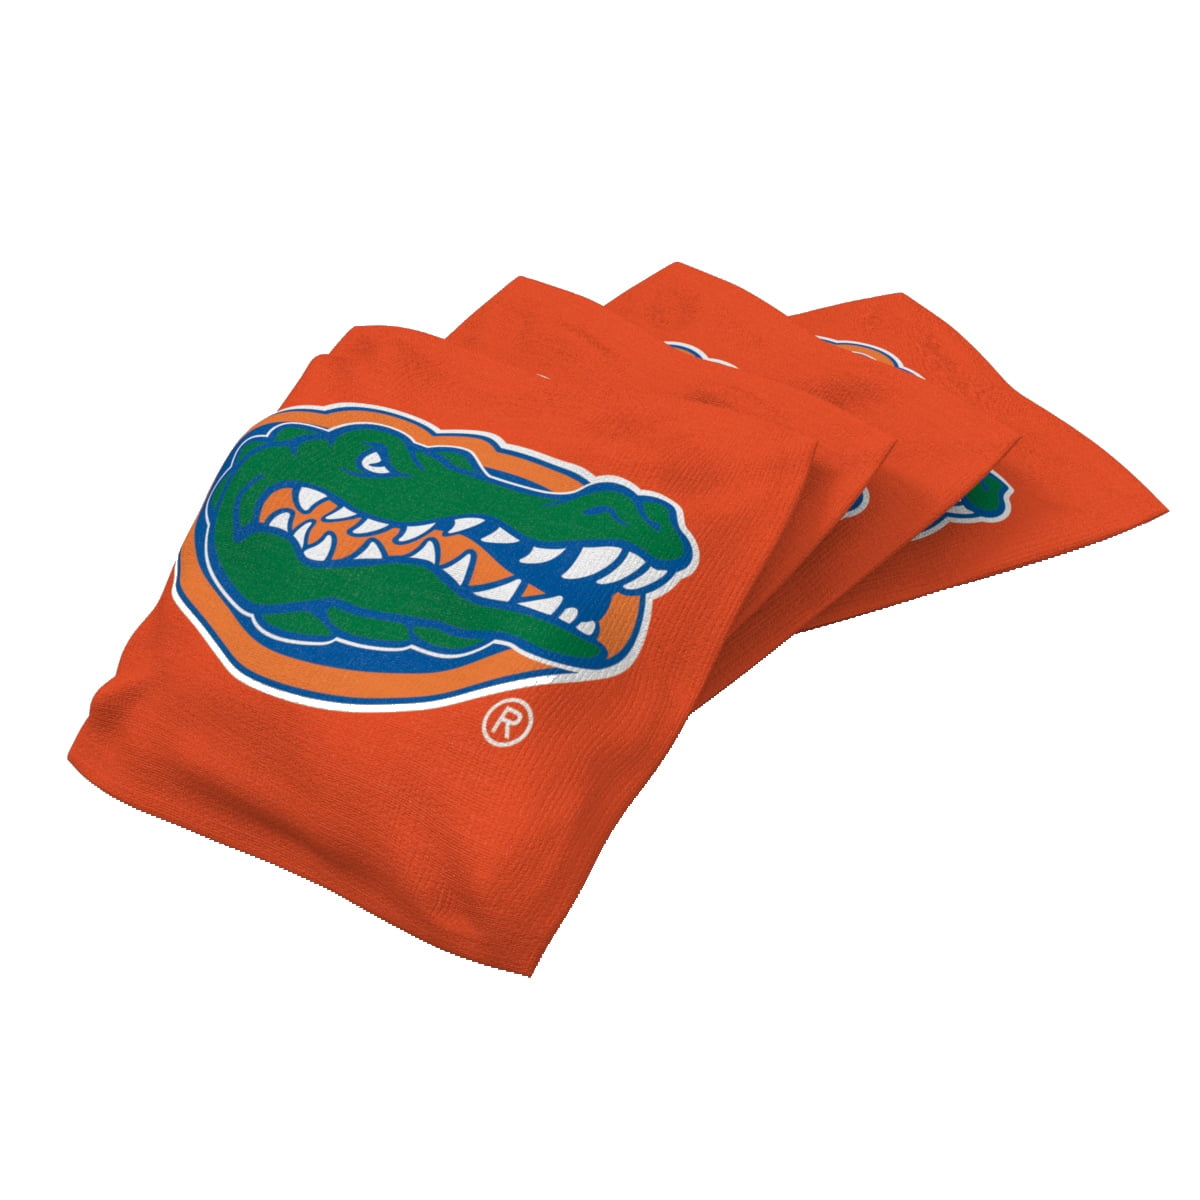 ALL WEATHER University of Florida Gators Cornhole Bean Bags 8 Resin Filled Bags 